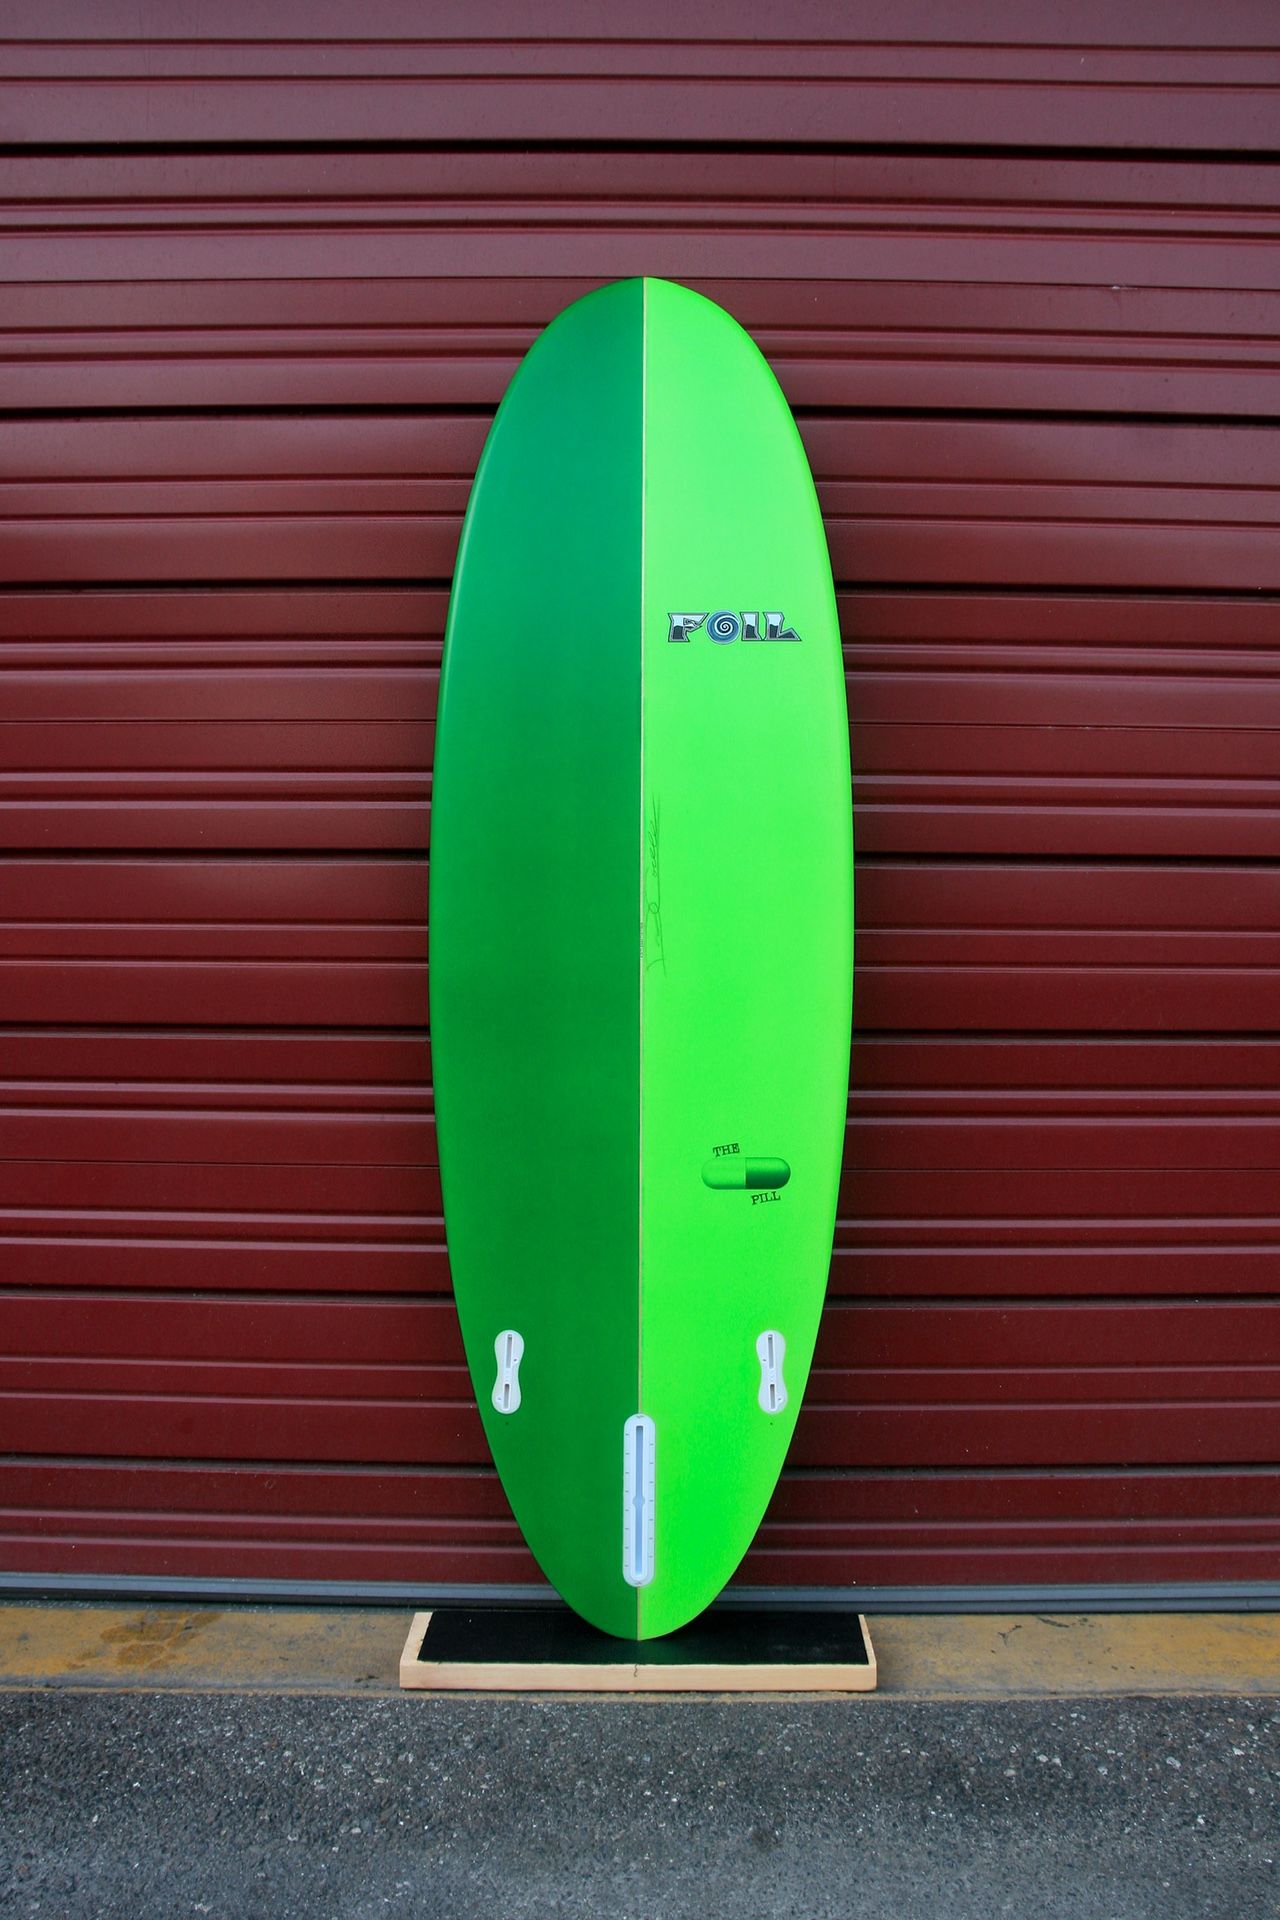 New 6’0” FOIL “The Pill” short board surfboard